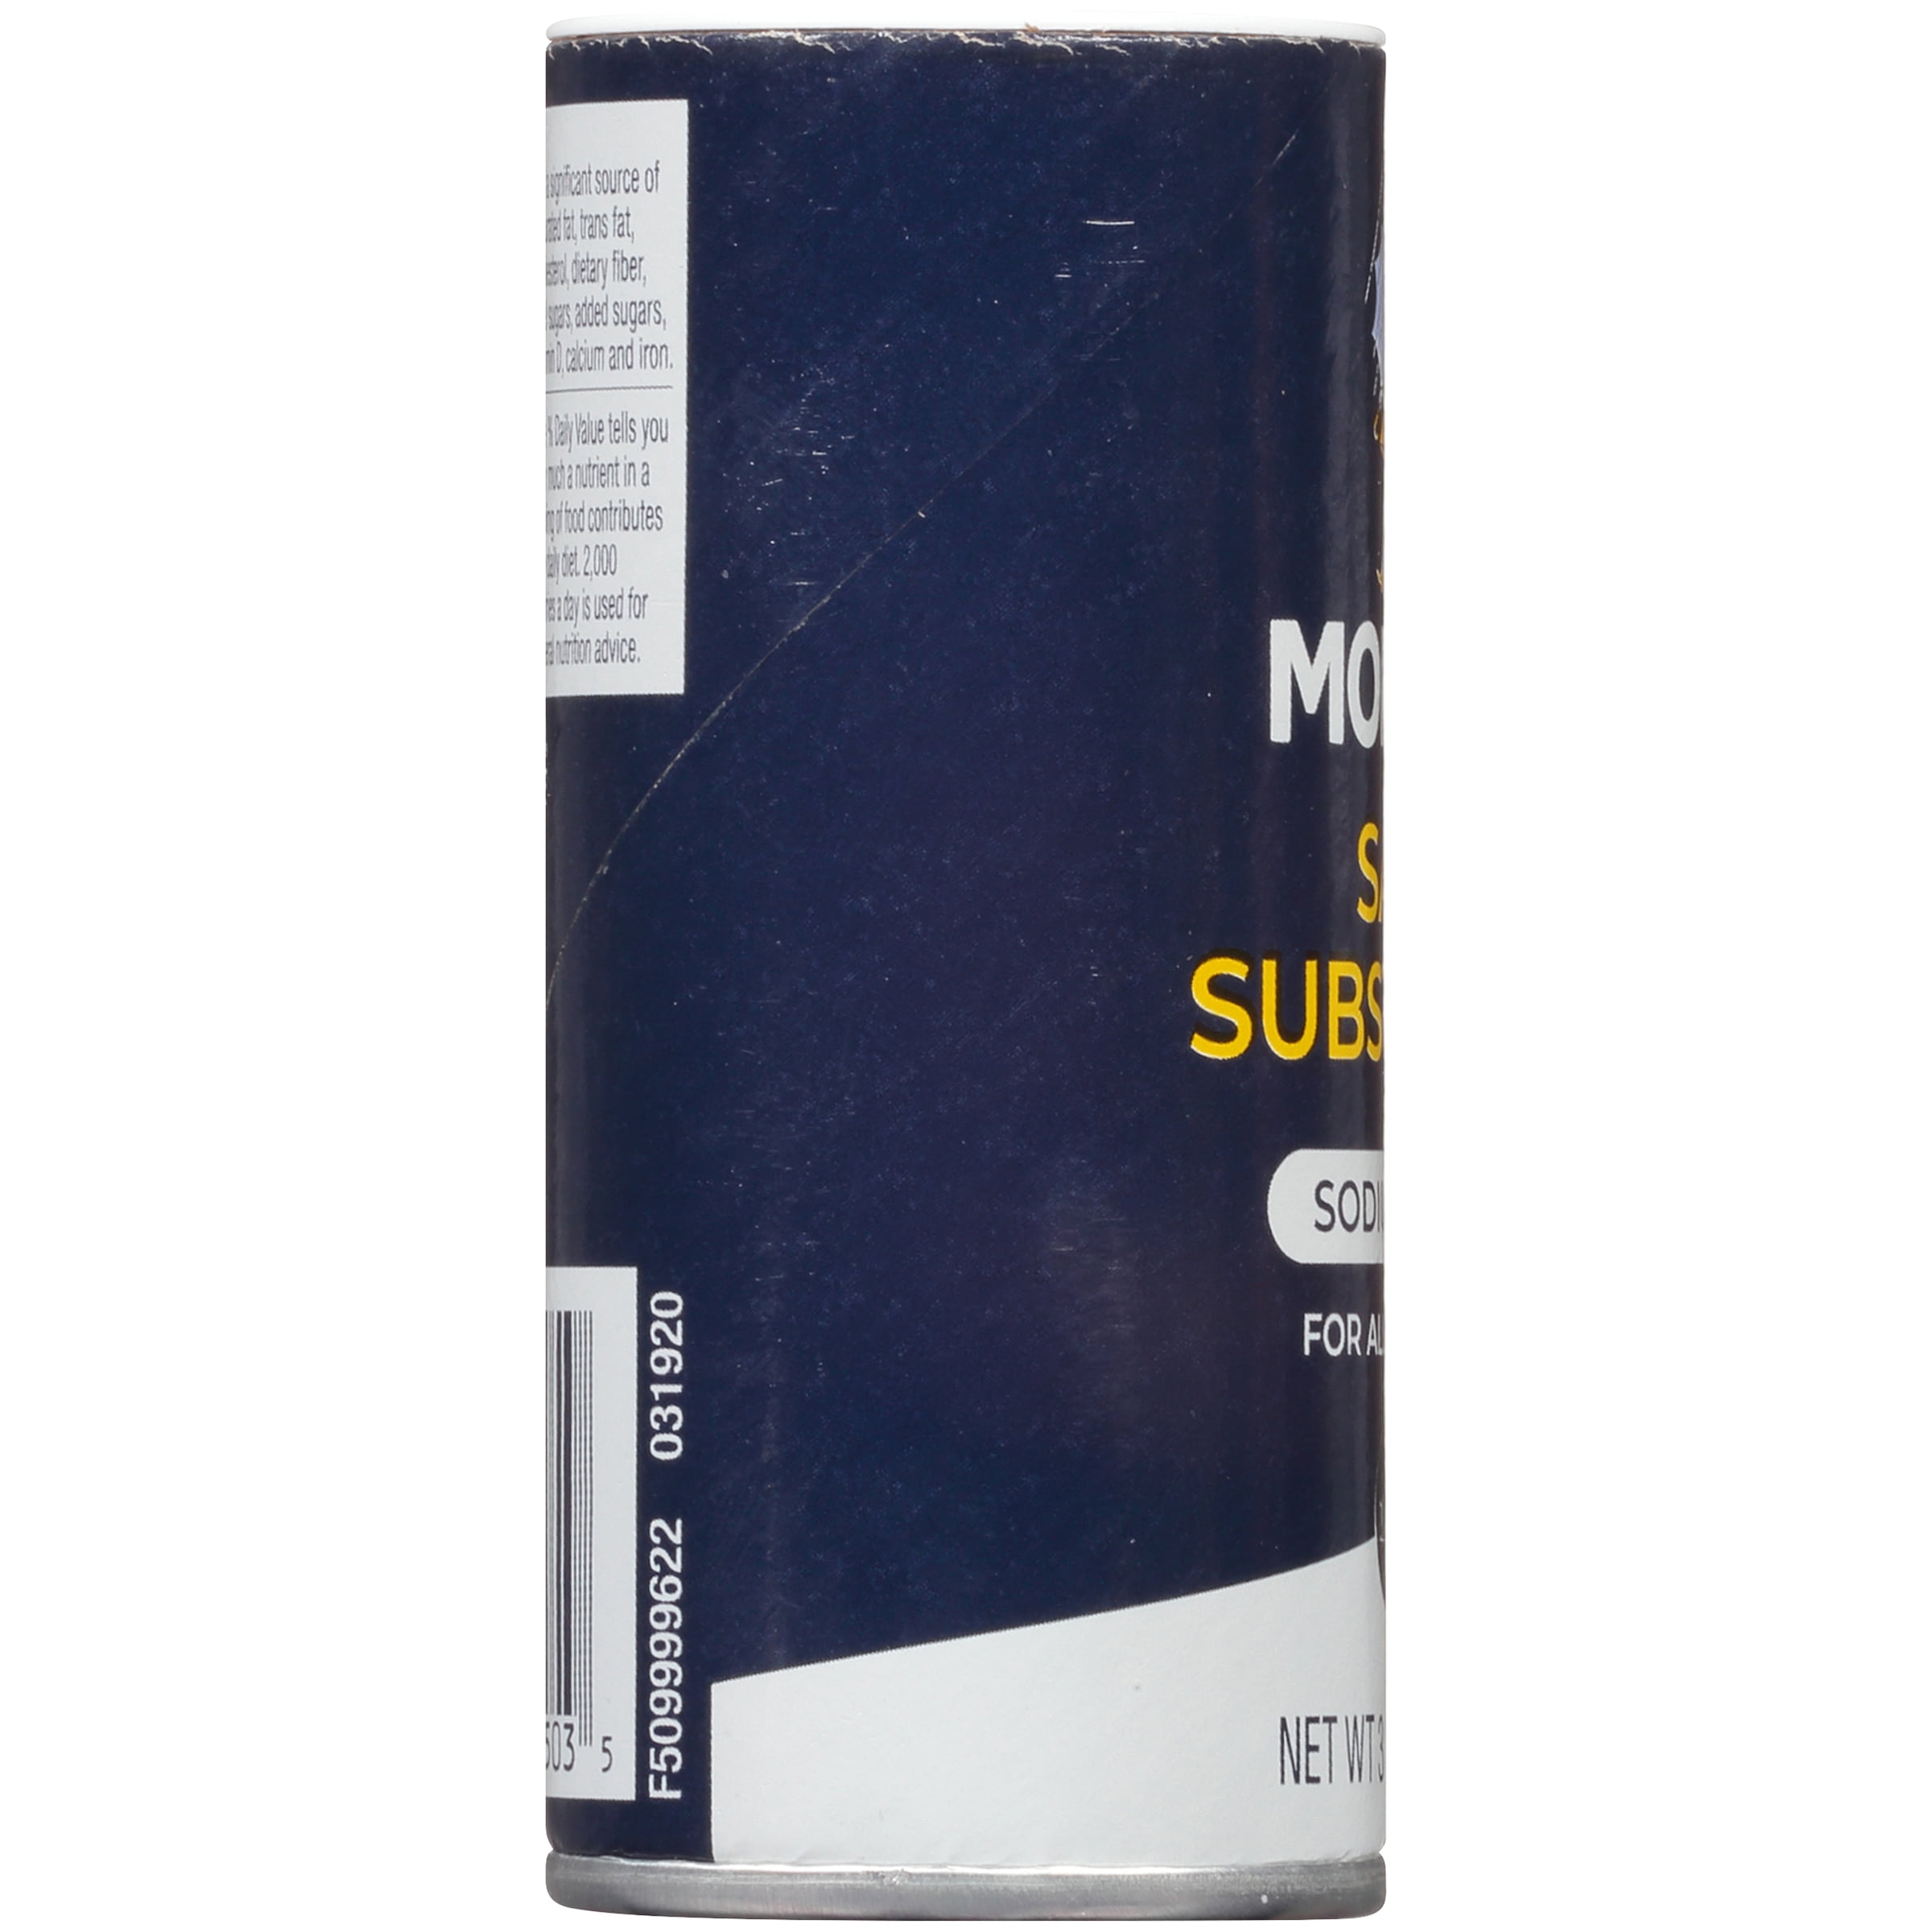 Morton® Lite Salt™ 11 Oz. Shaker, Shop